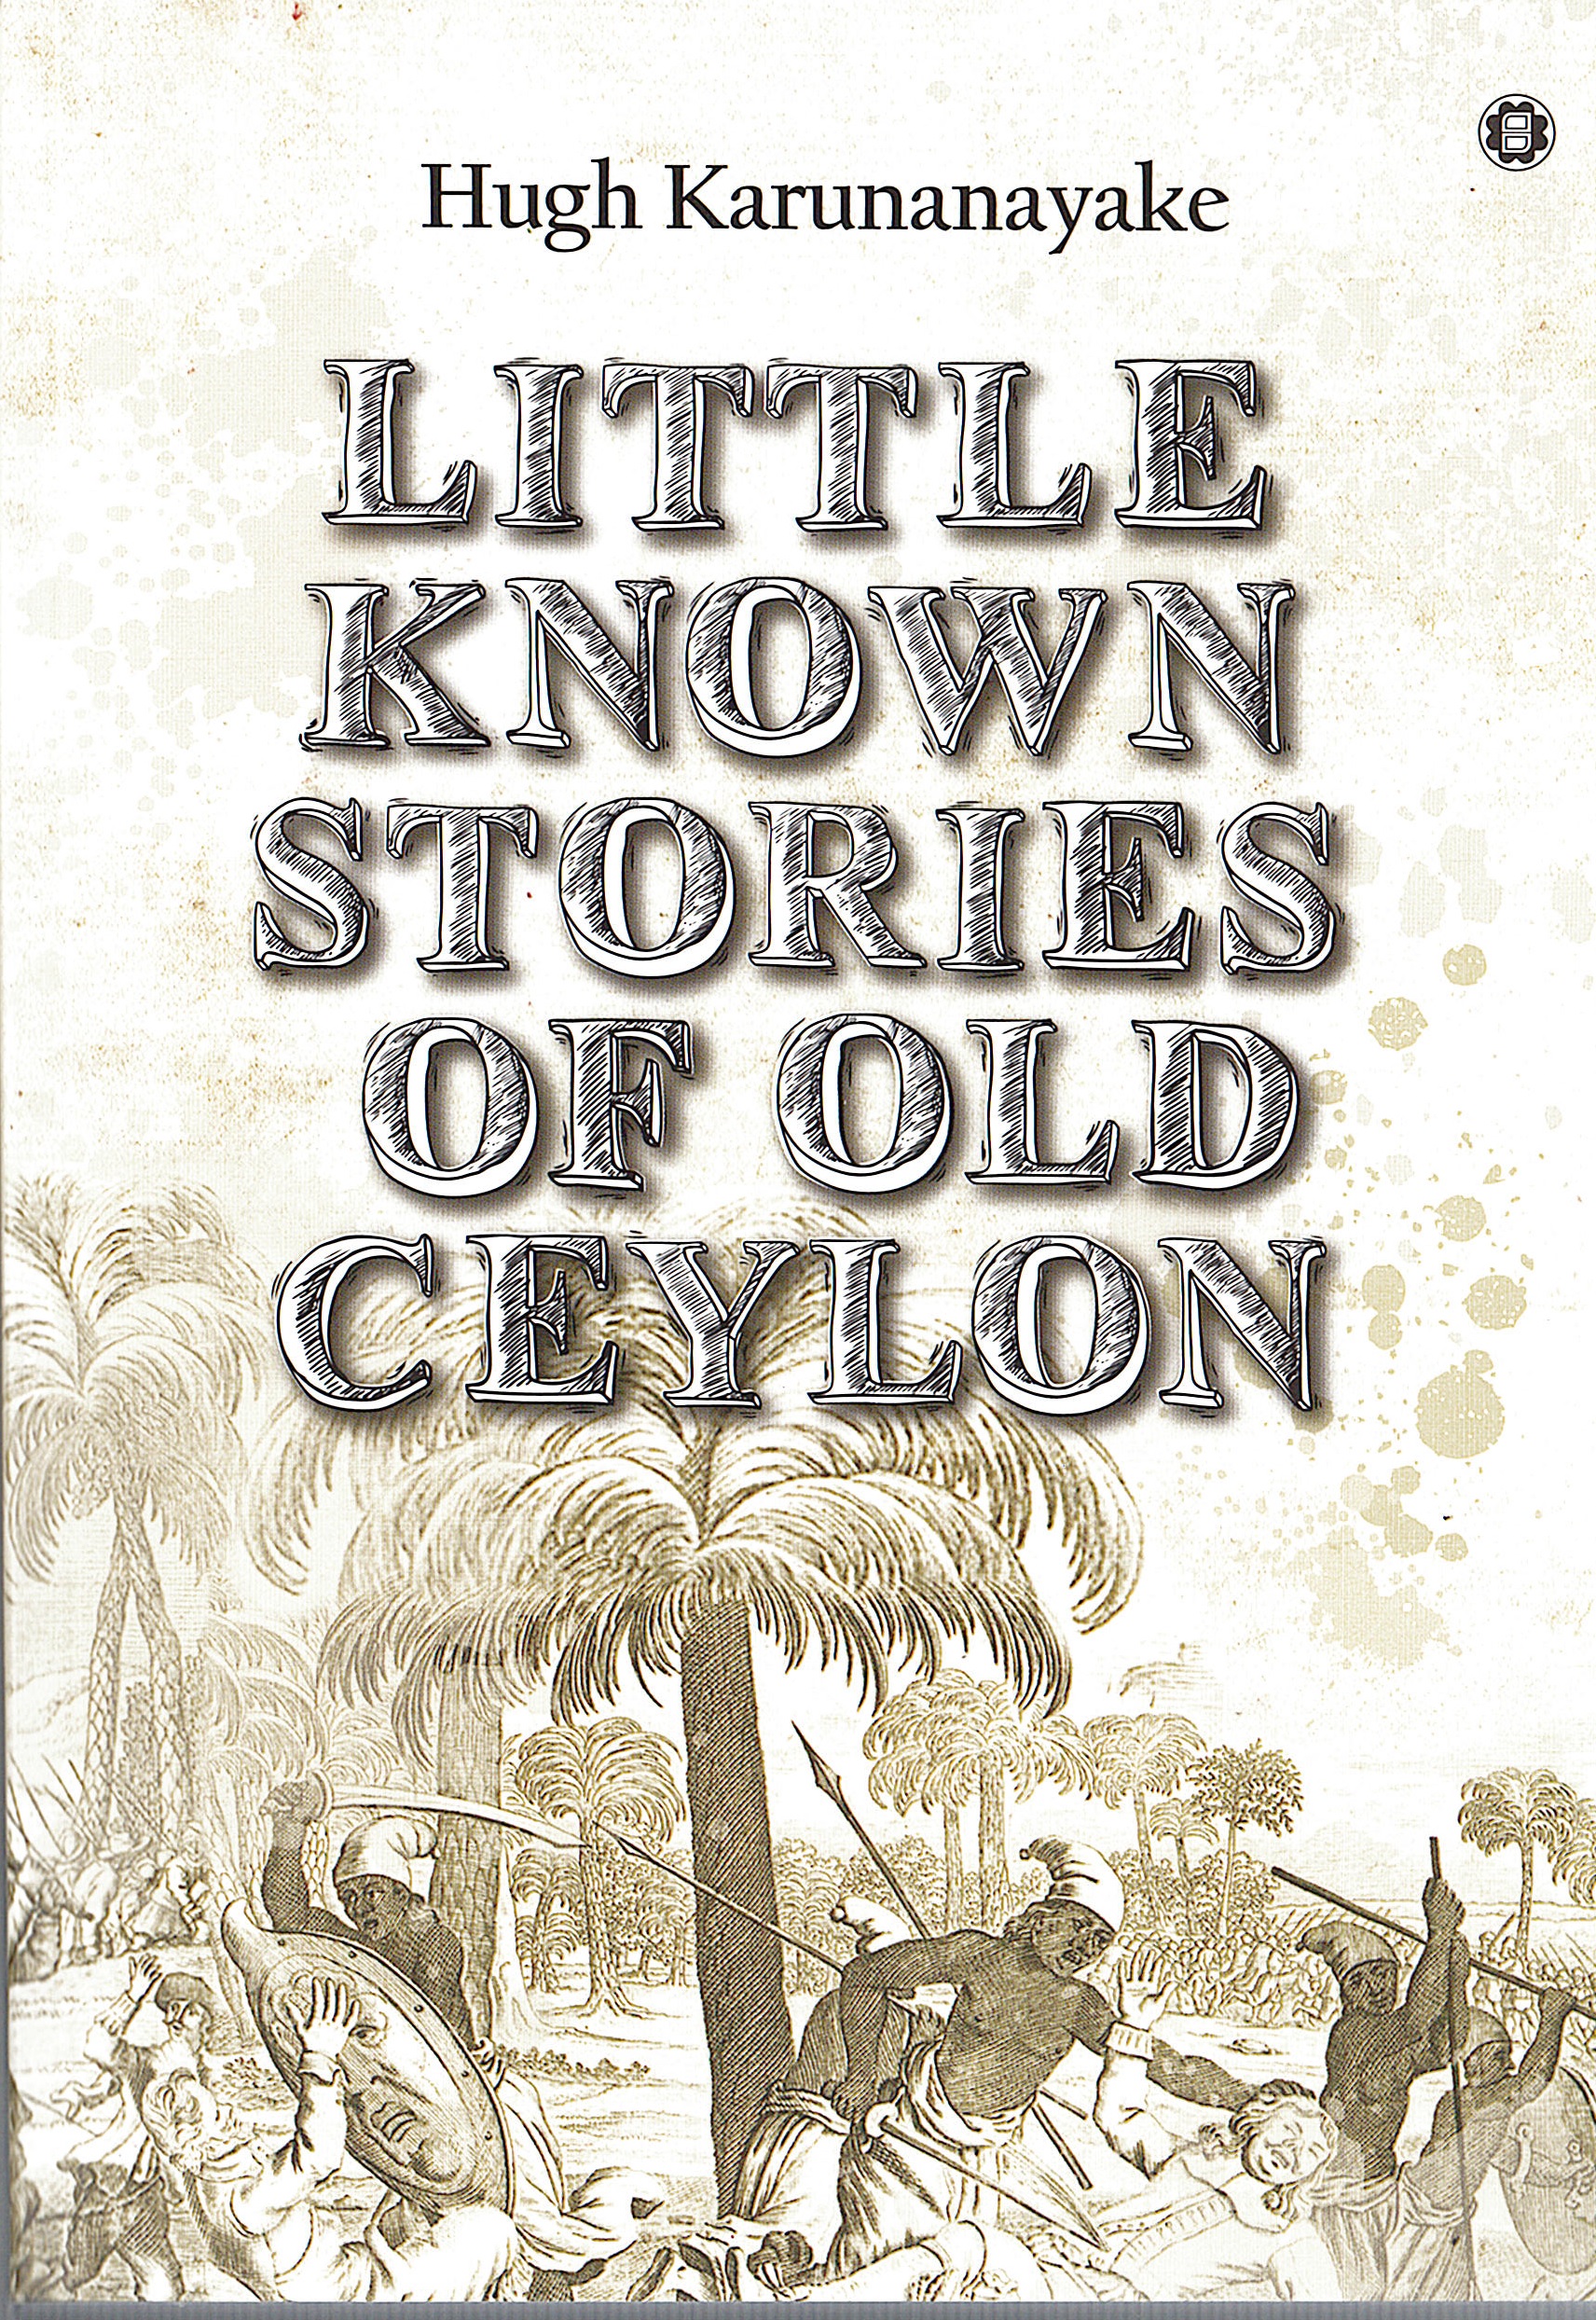 Little Known Stories Of Old Ceylon